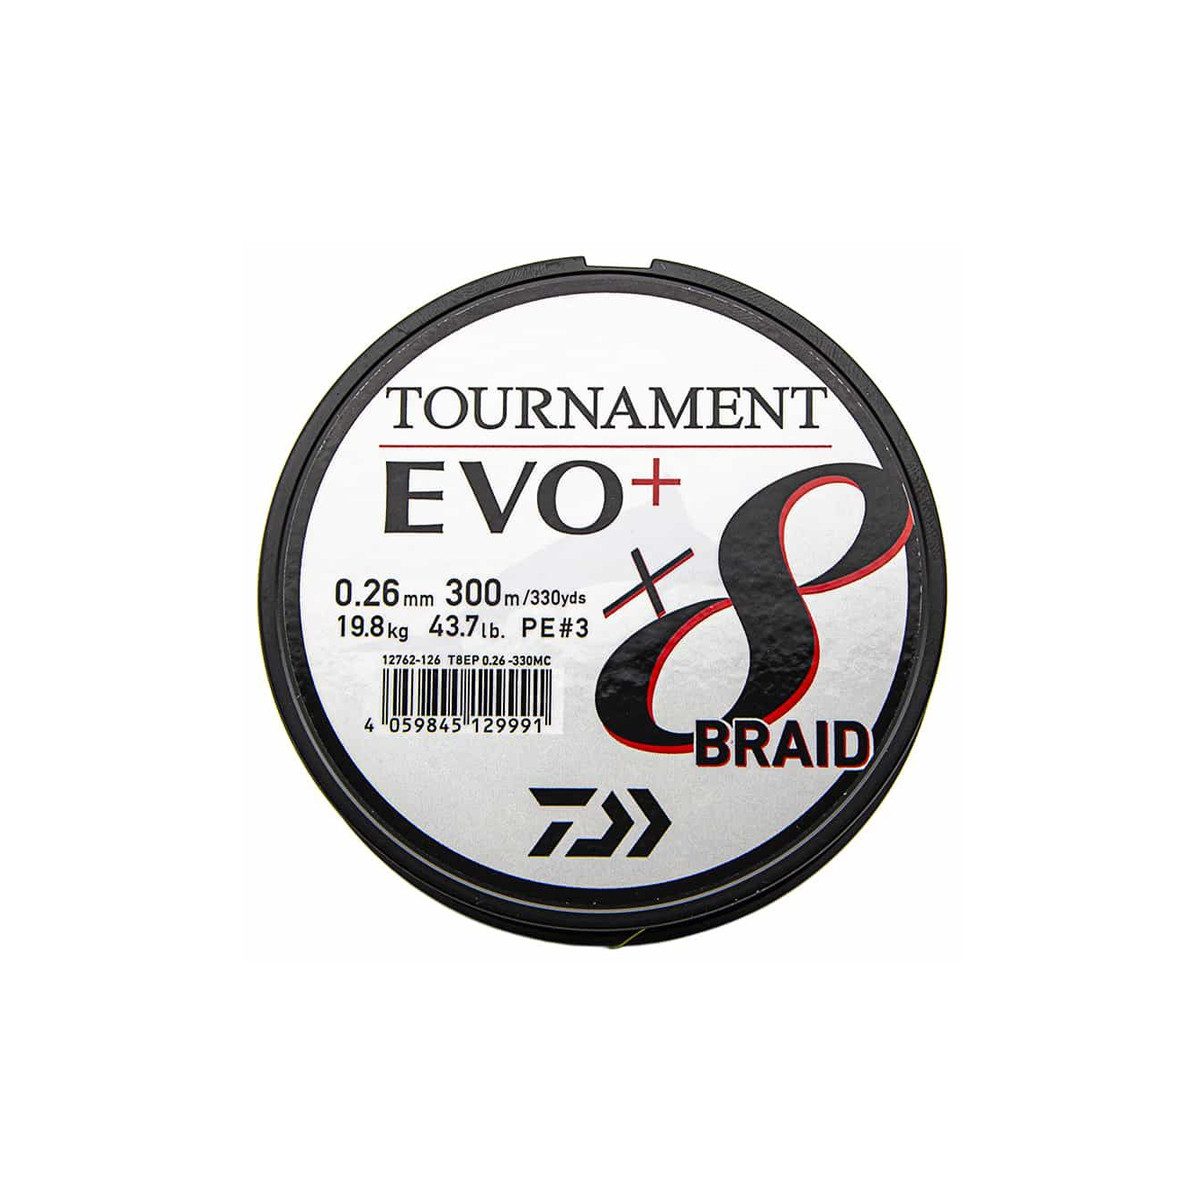 DAIWA TOURNAMENT EVO+ X8 BRAID 135M CHARTREUSE